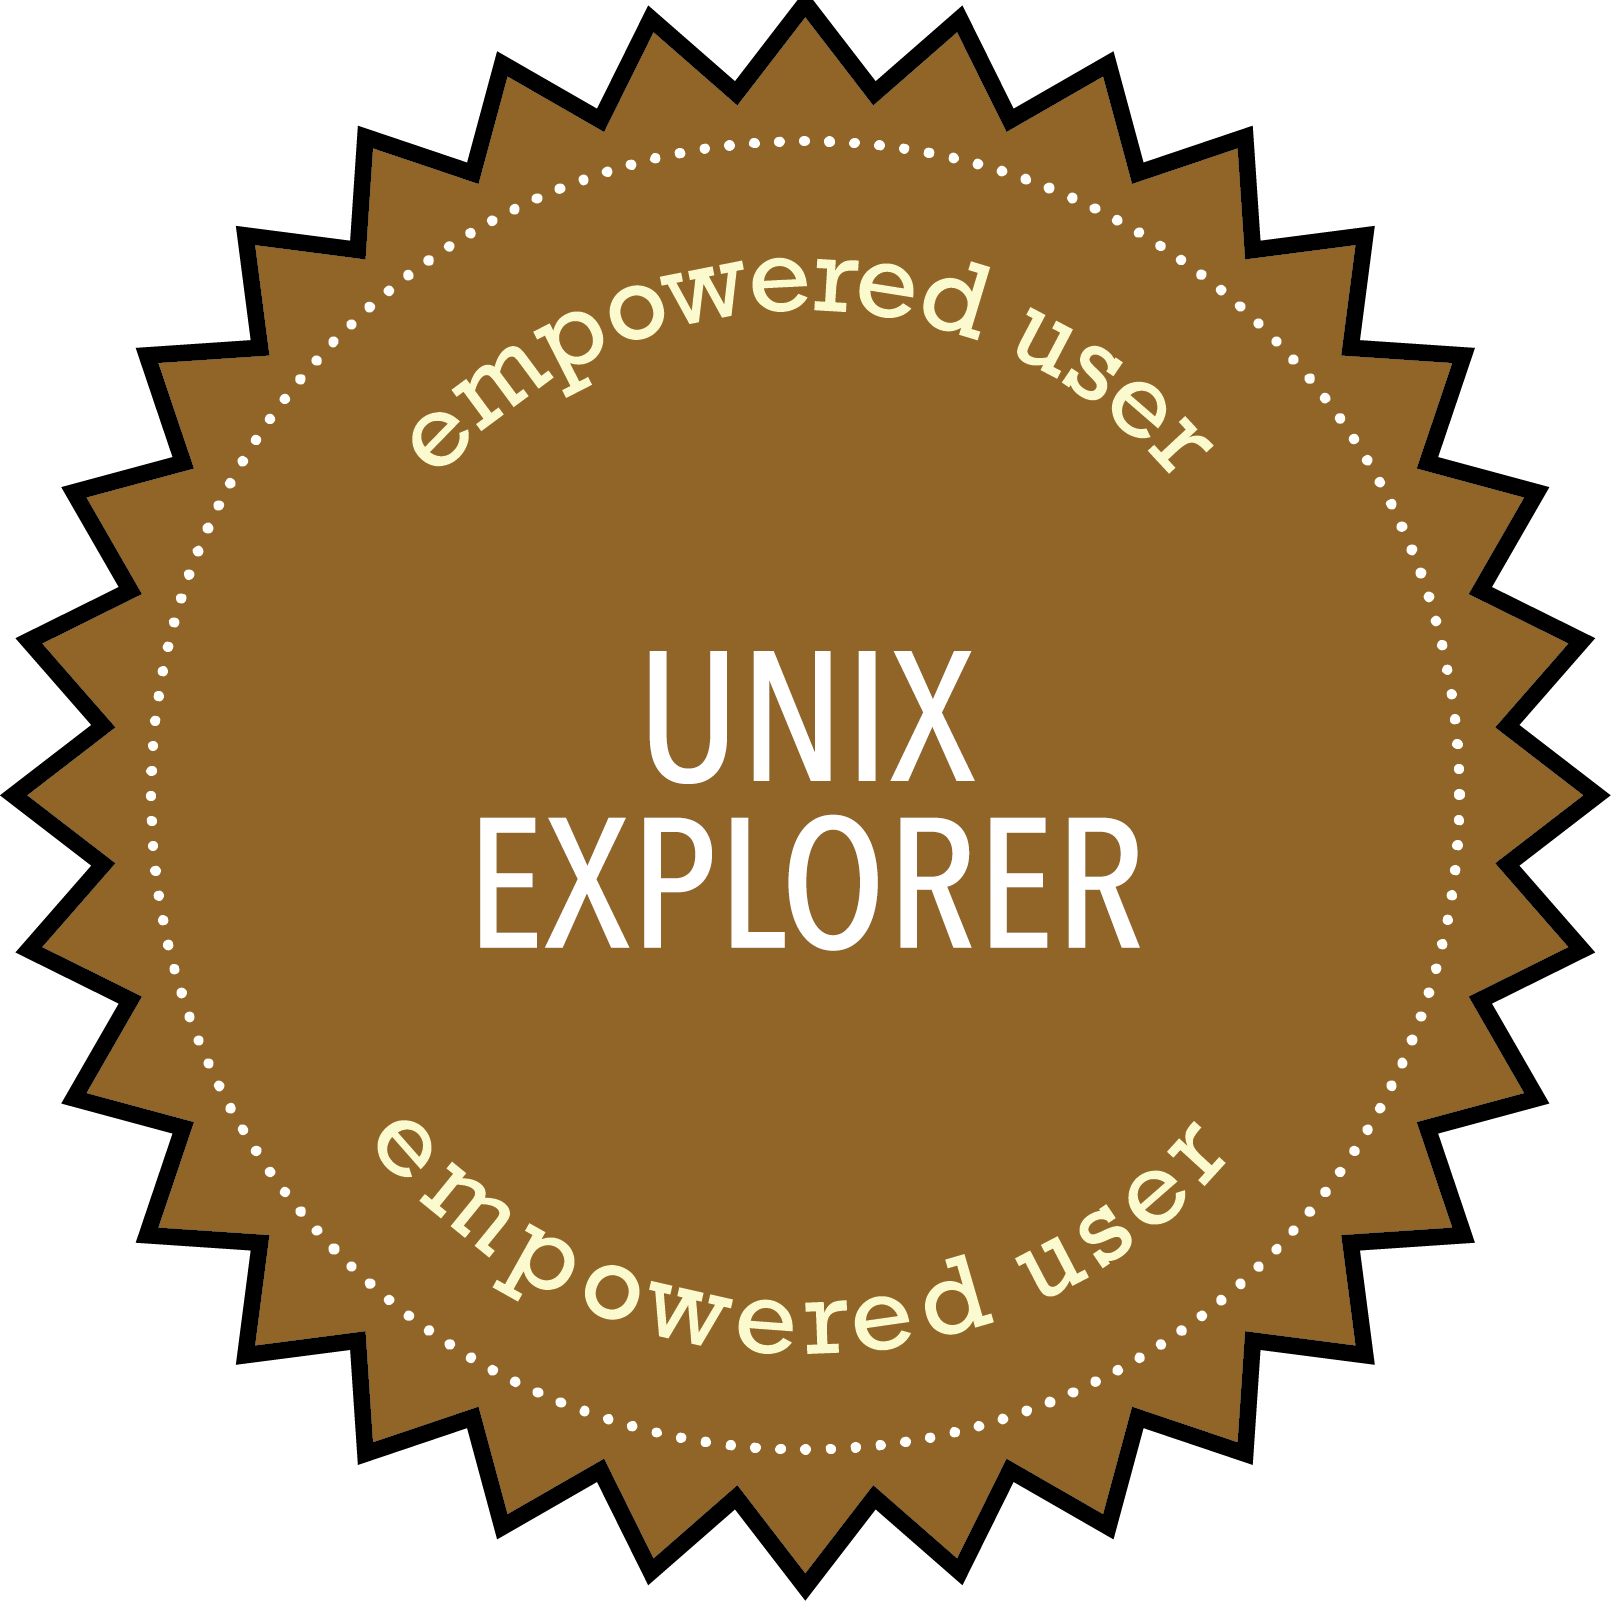 Empowered User Unix Explorer